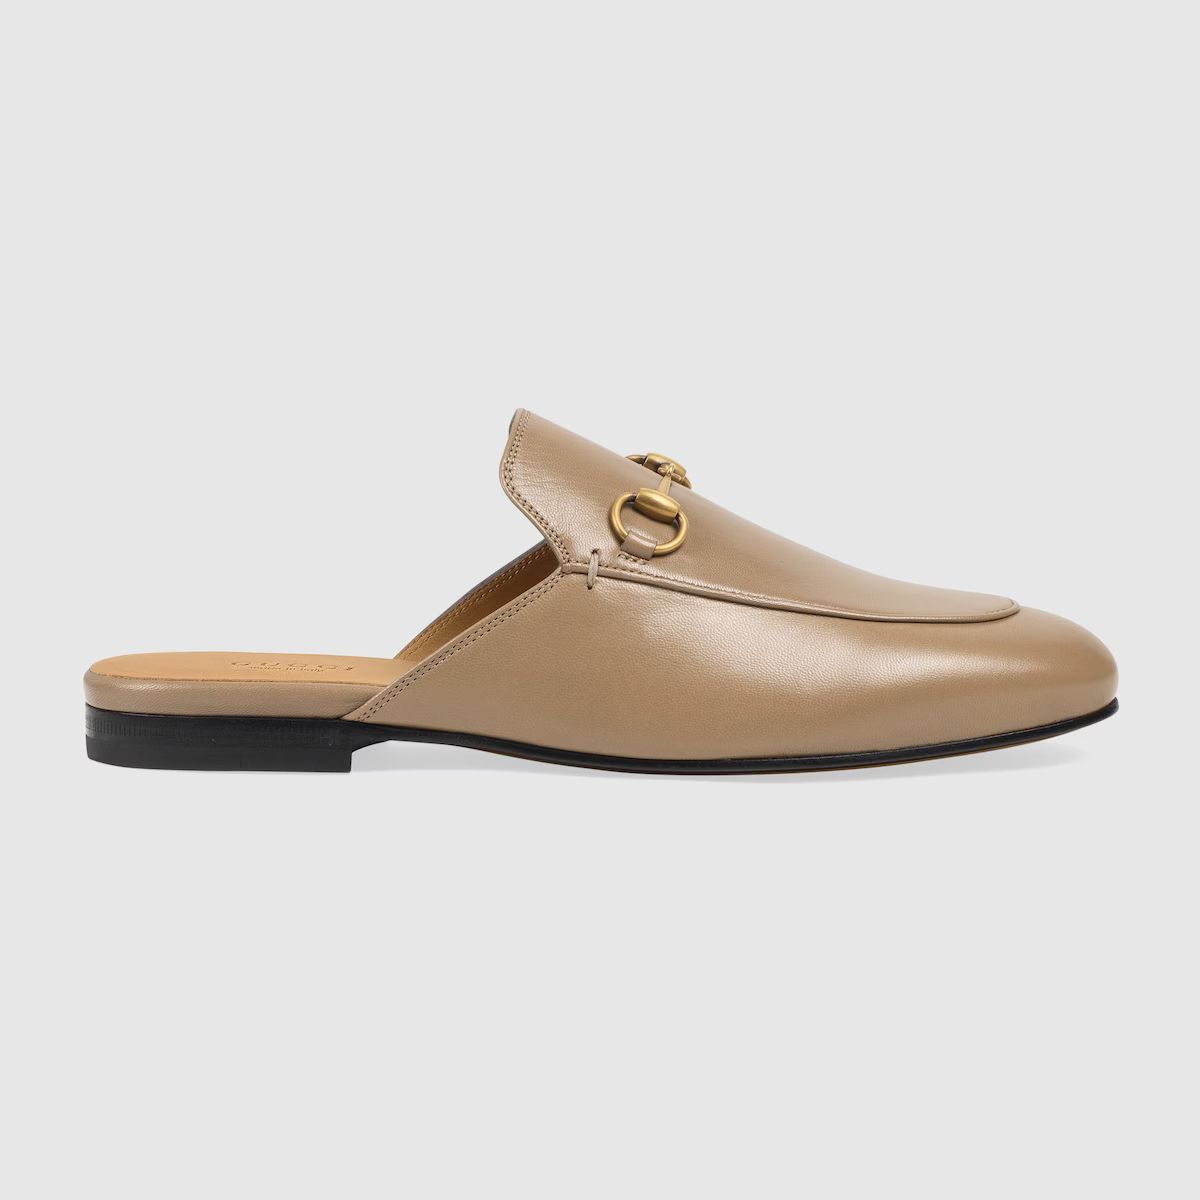 Gucci Princetown leather slipper | Gucci (US)